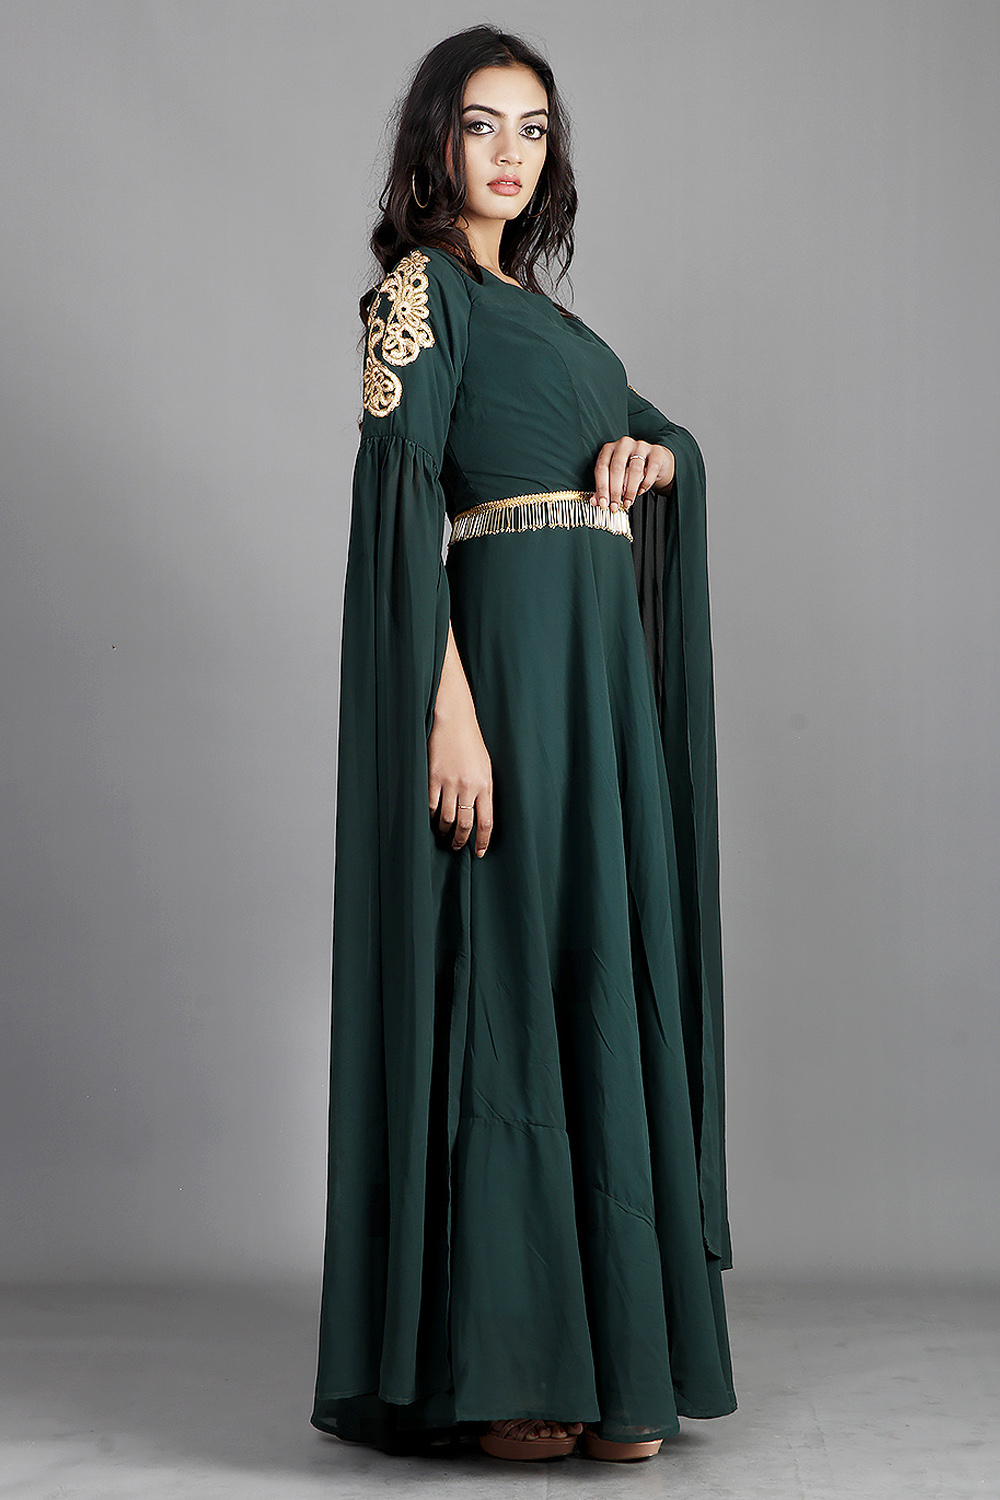 Melbourne Silk Party Wear Ladies Green Elegant Gown at Rs 4754 in Delhi